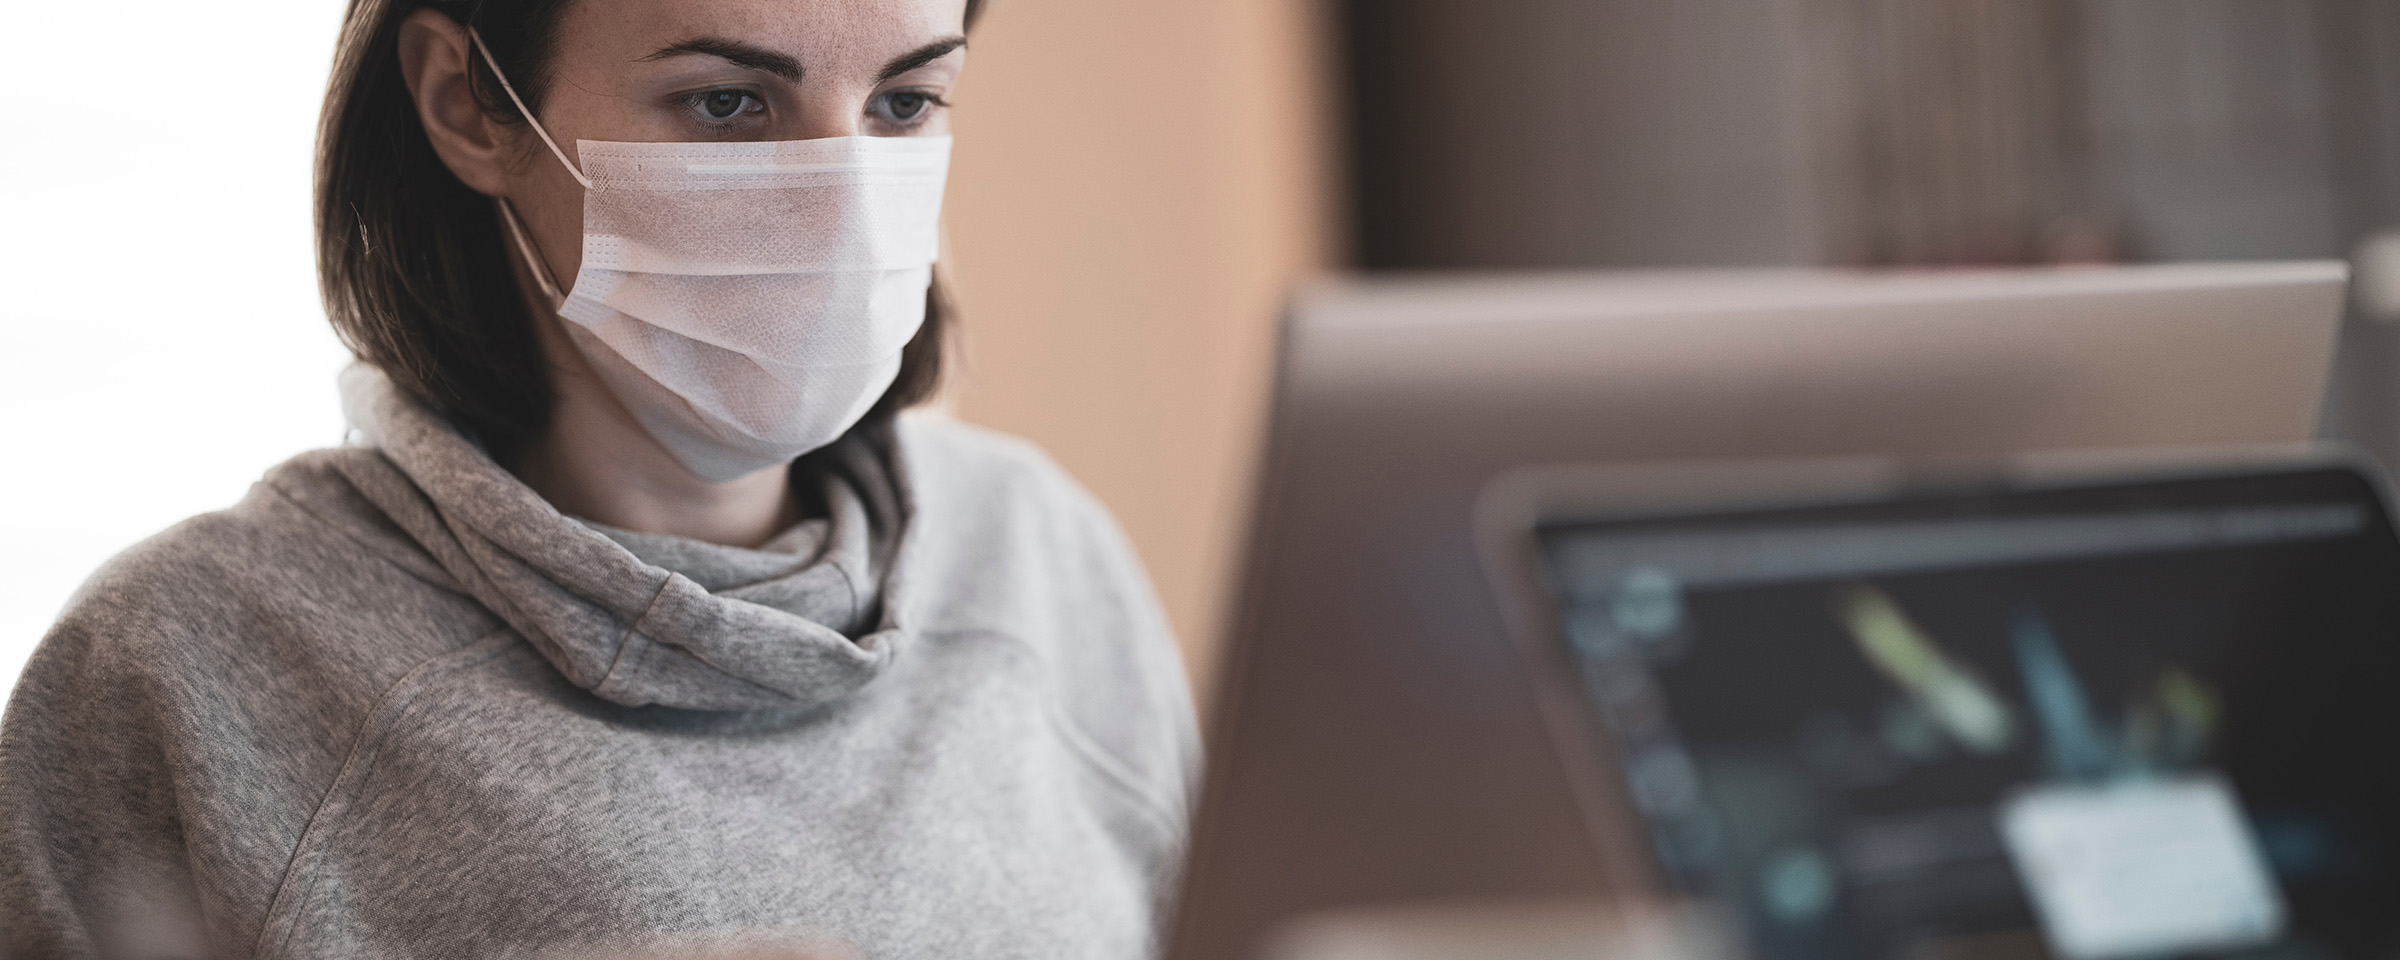 woman wearing mask at a computer